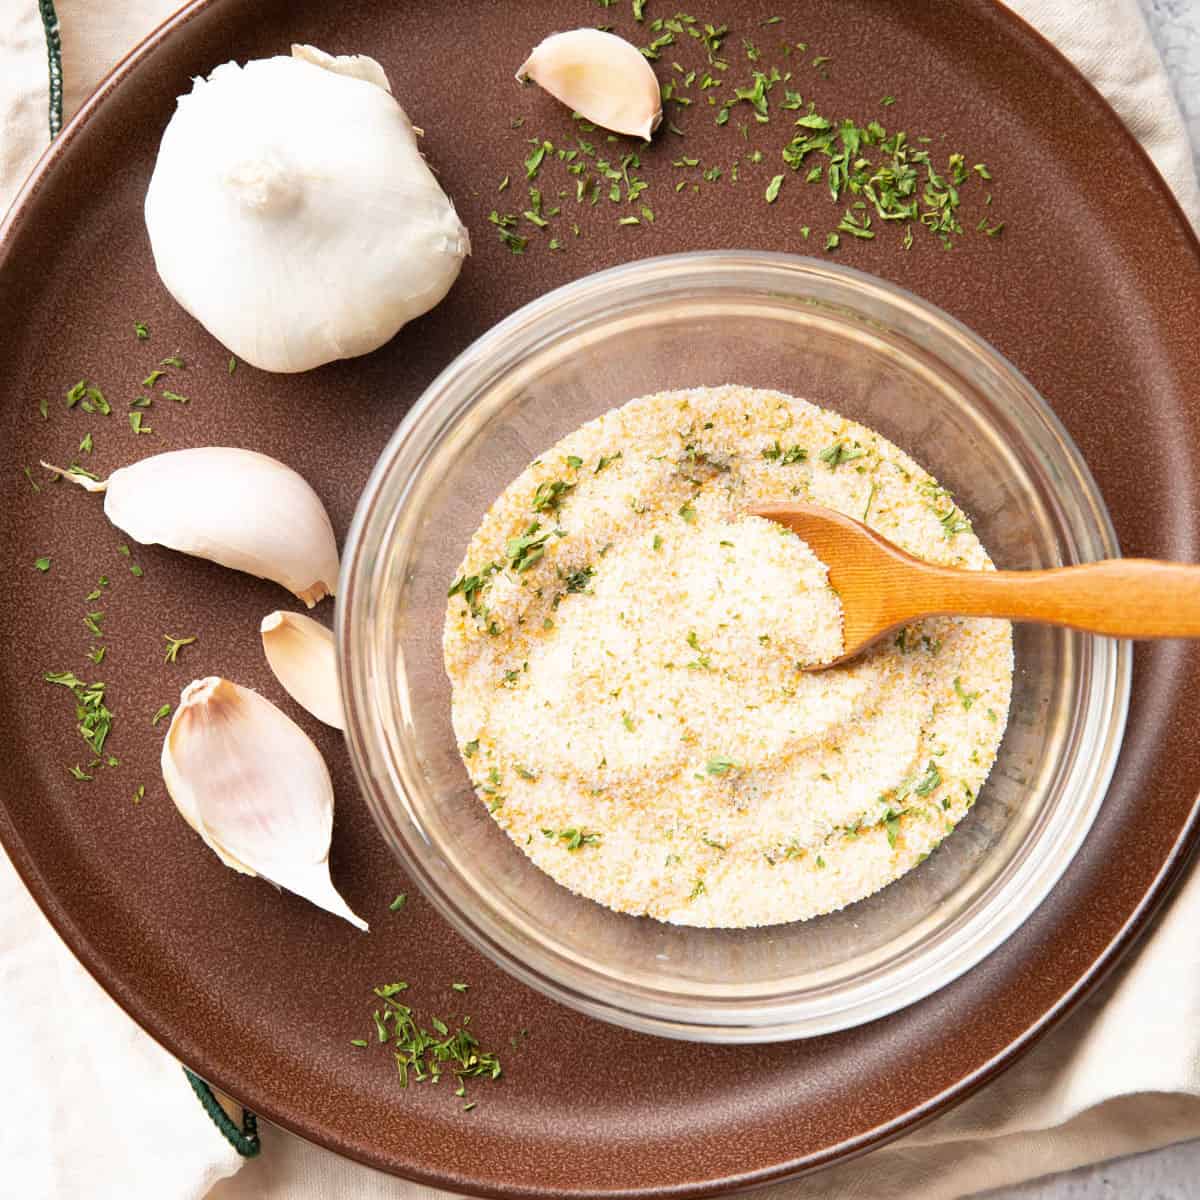 Garlic Salt with Cloves of Garlic on a Plate